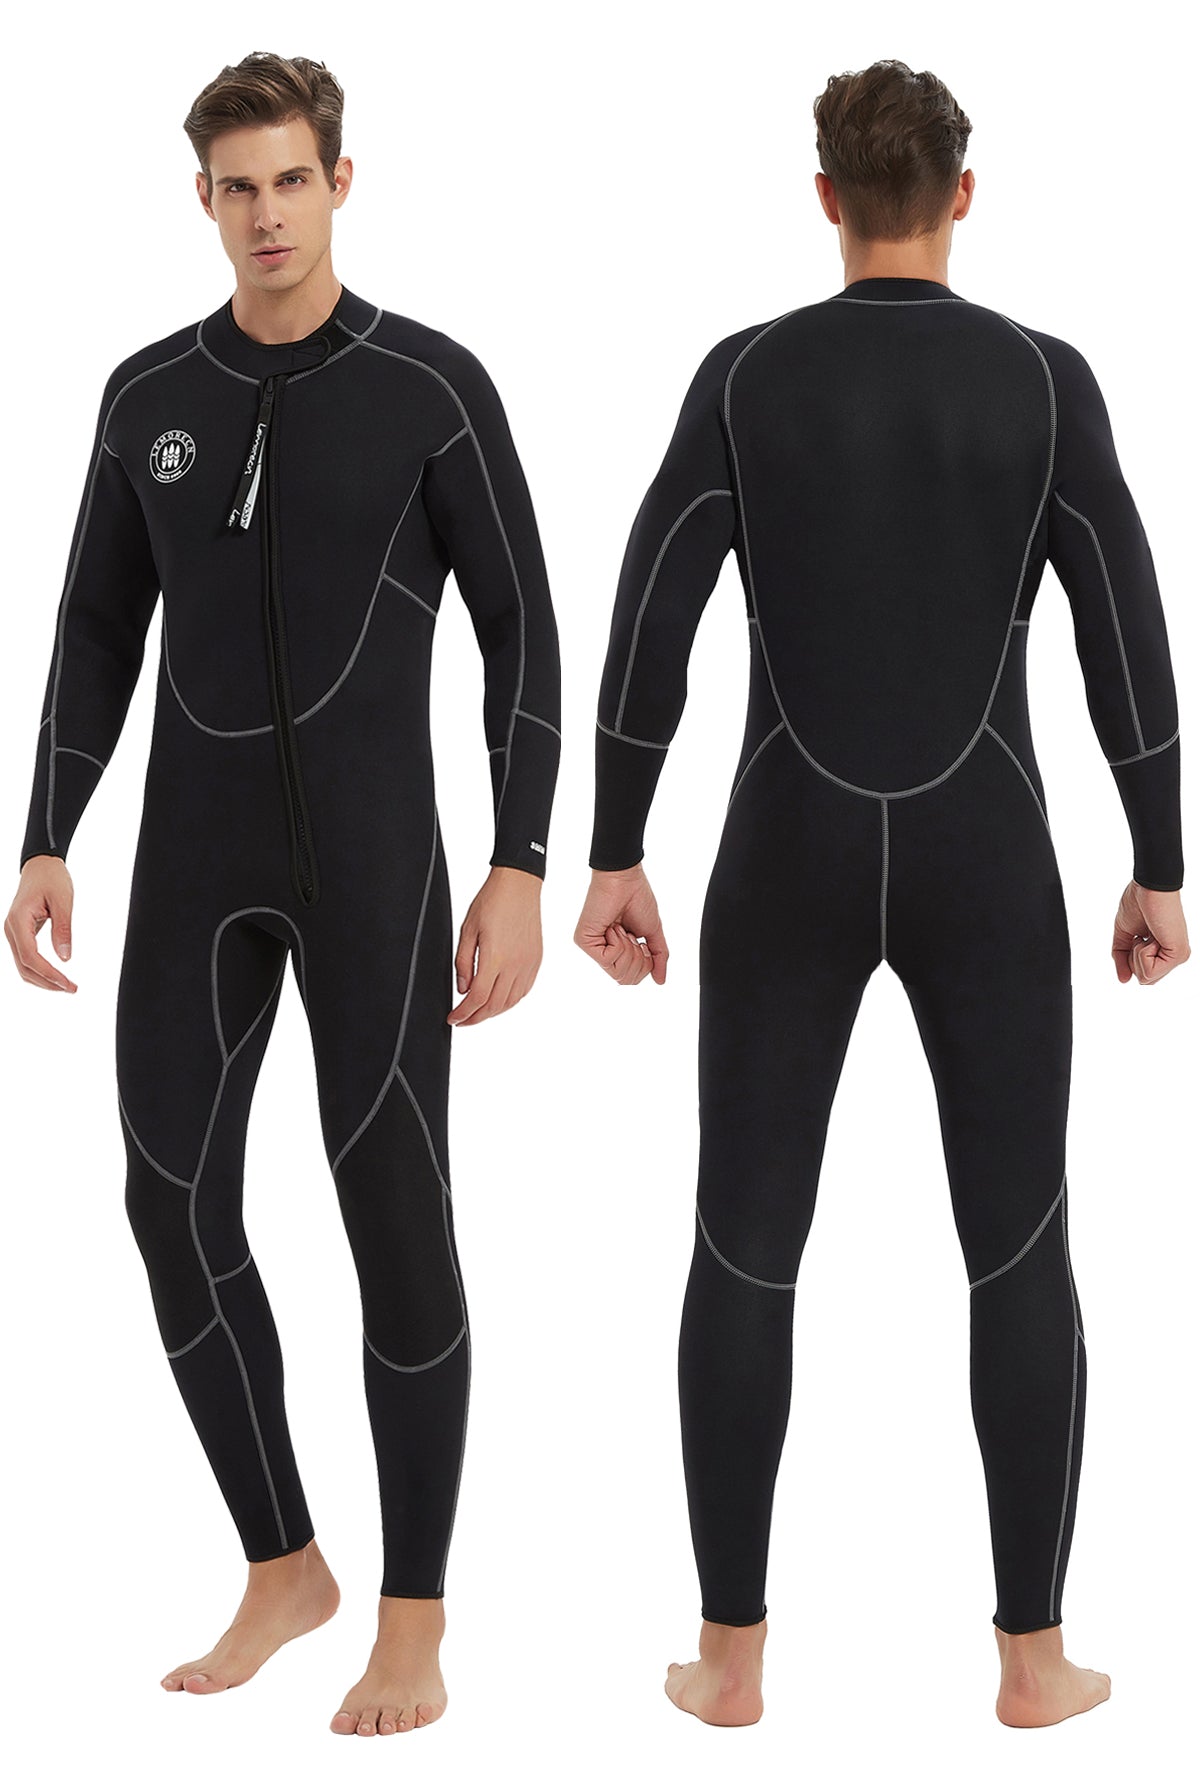 REALON Wetsuit Men 3/4 mm Neoprene Full Body Thermal Scuba Diving Suits  Size M